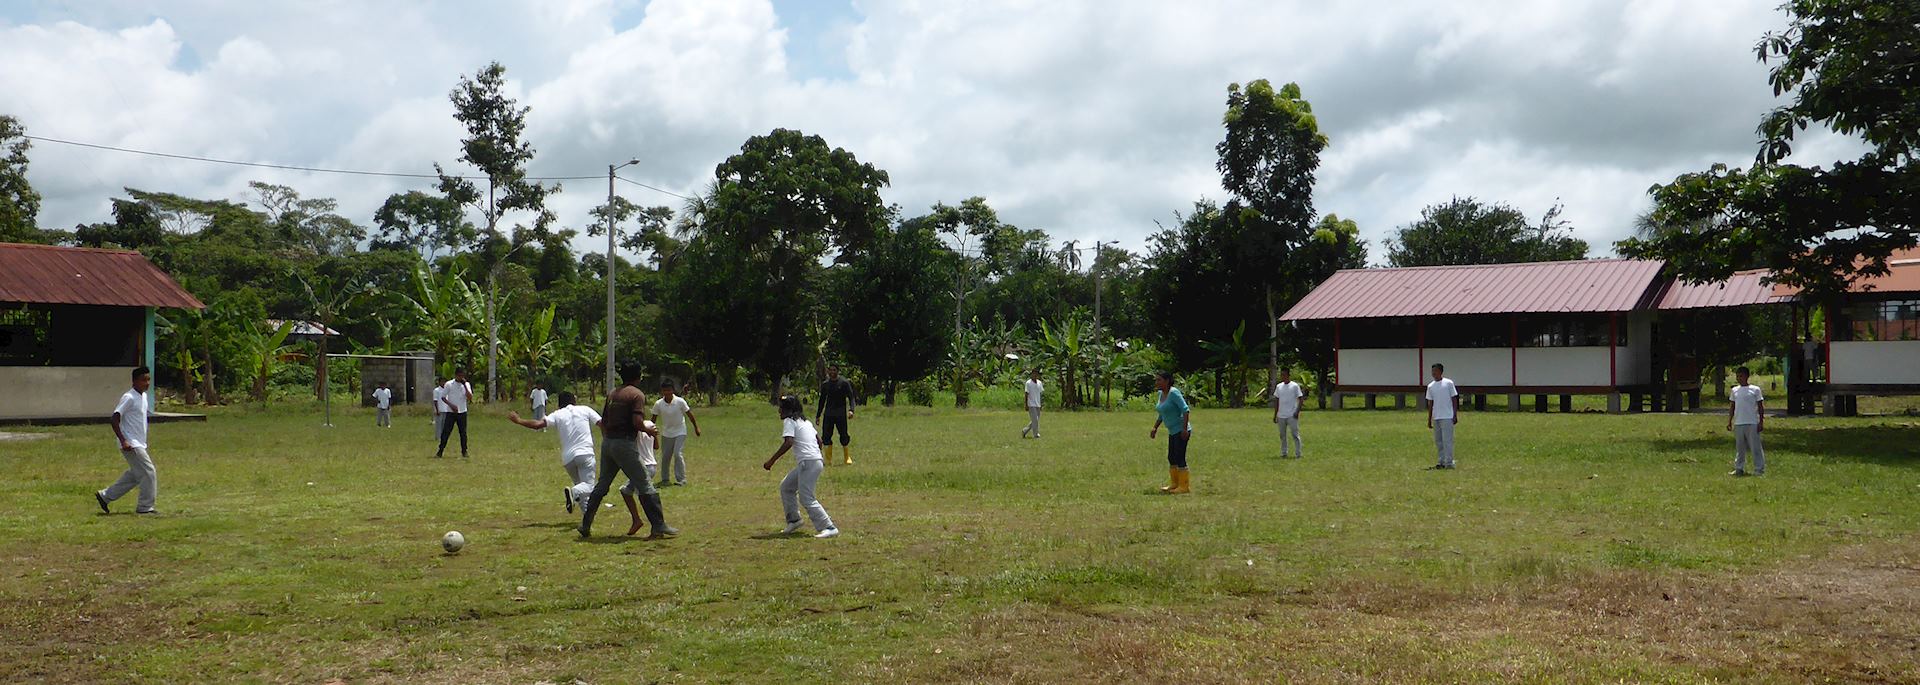 Bella Vista community playing football